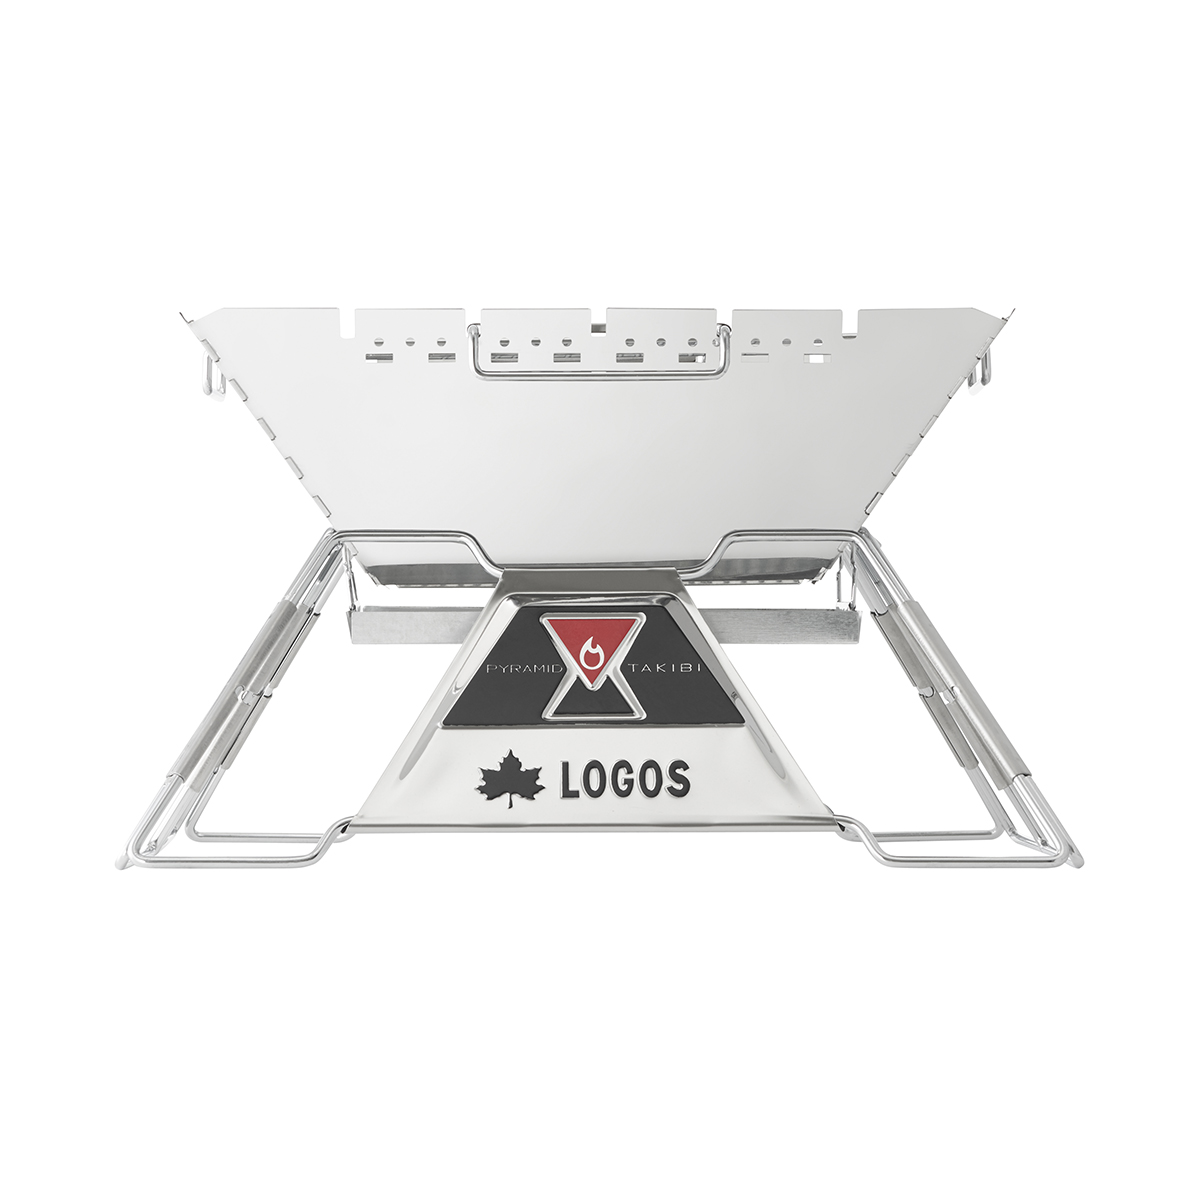 LOGOS the ピラミッドTAKIBI XL|ギア|グリル・たき火・キャンドル